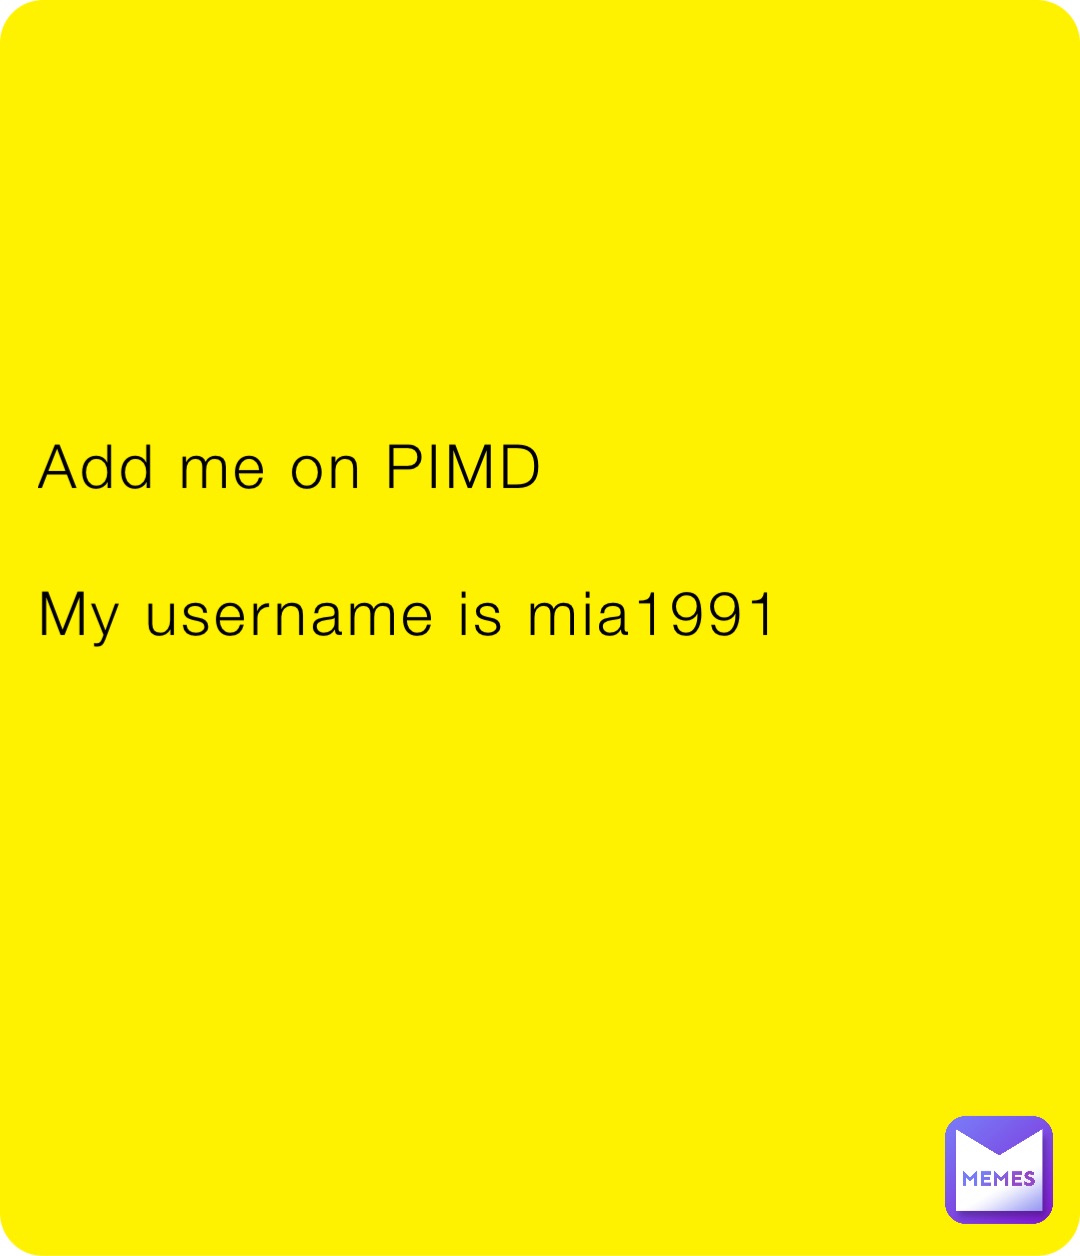 Add me on PIMD

My username is mia1991